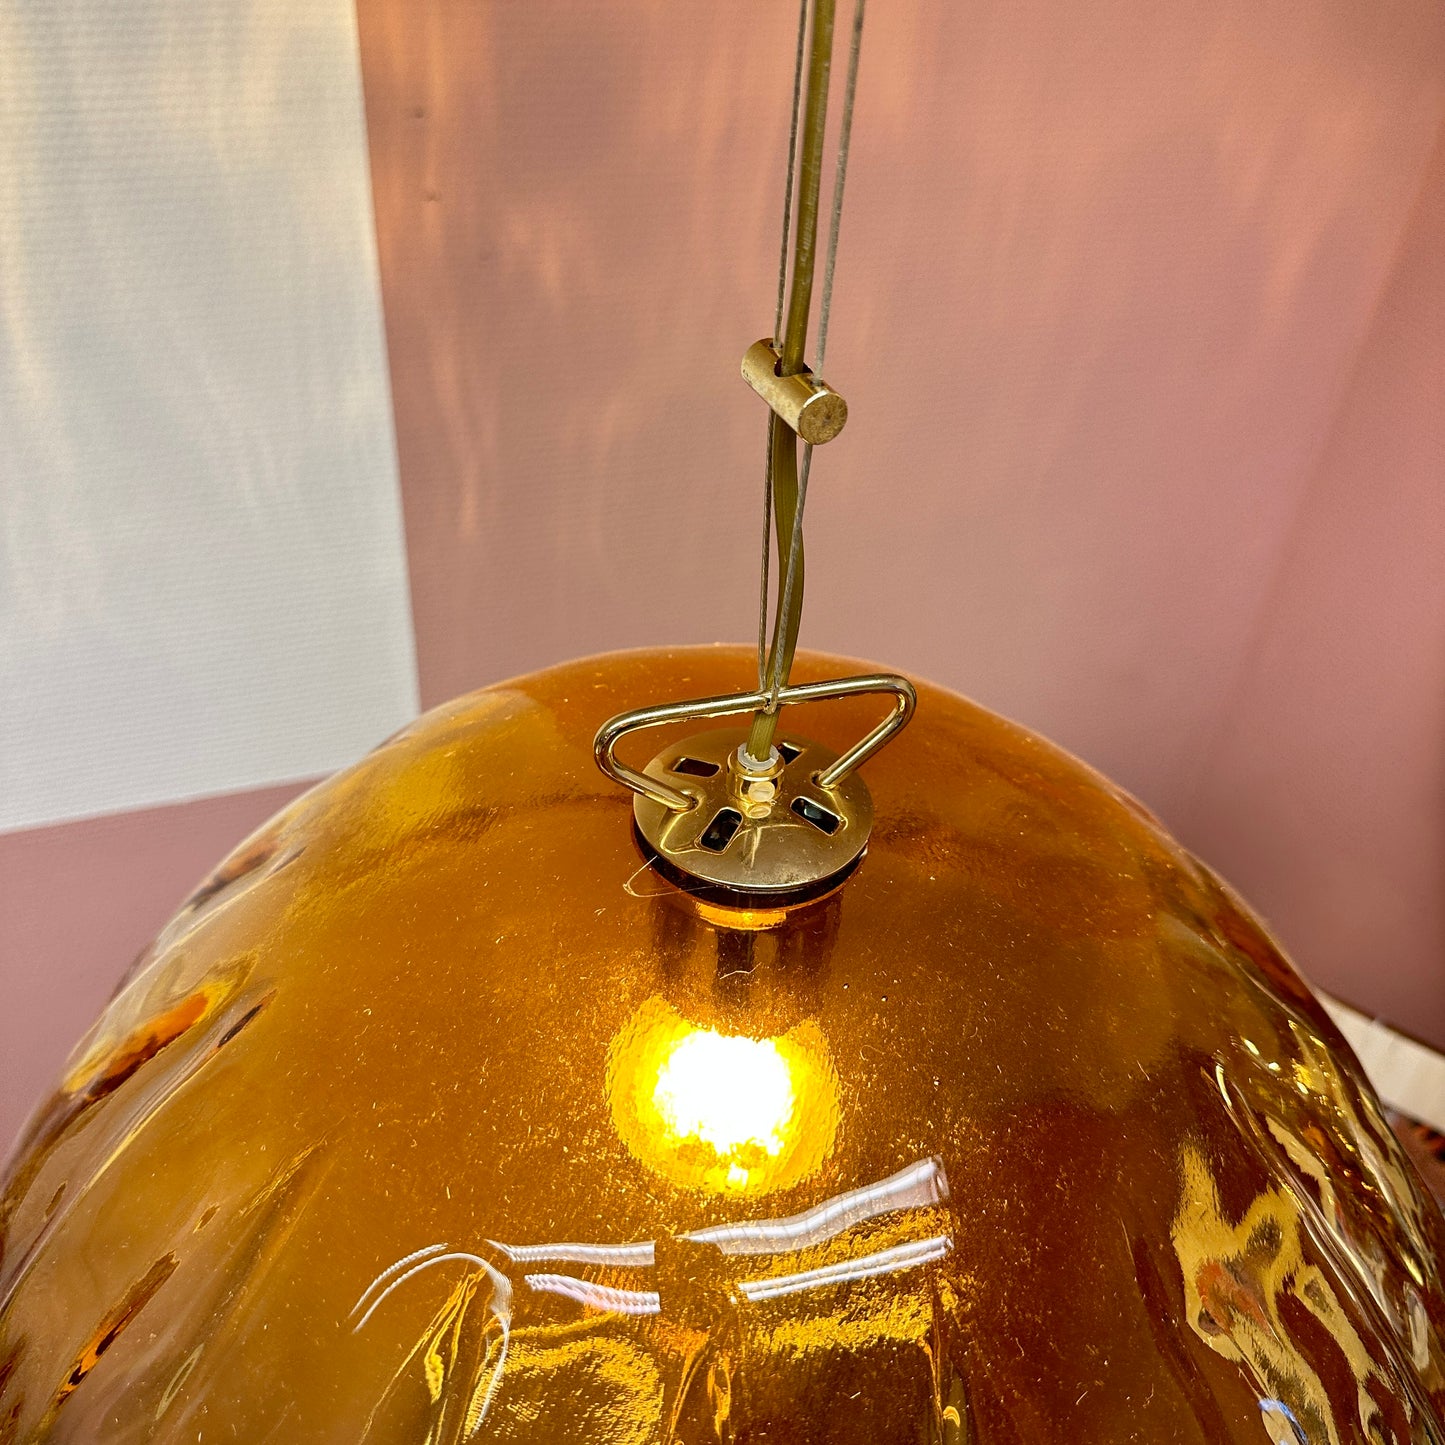 Italiaanse hanglamp van Muranoglas van La Murrina